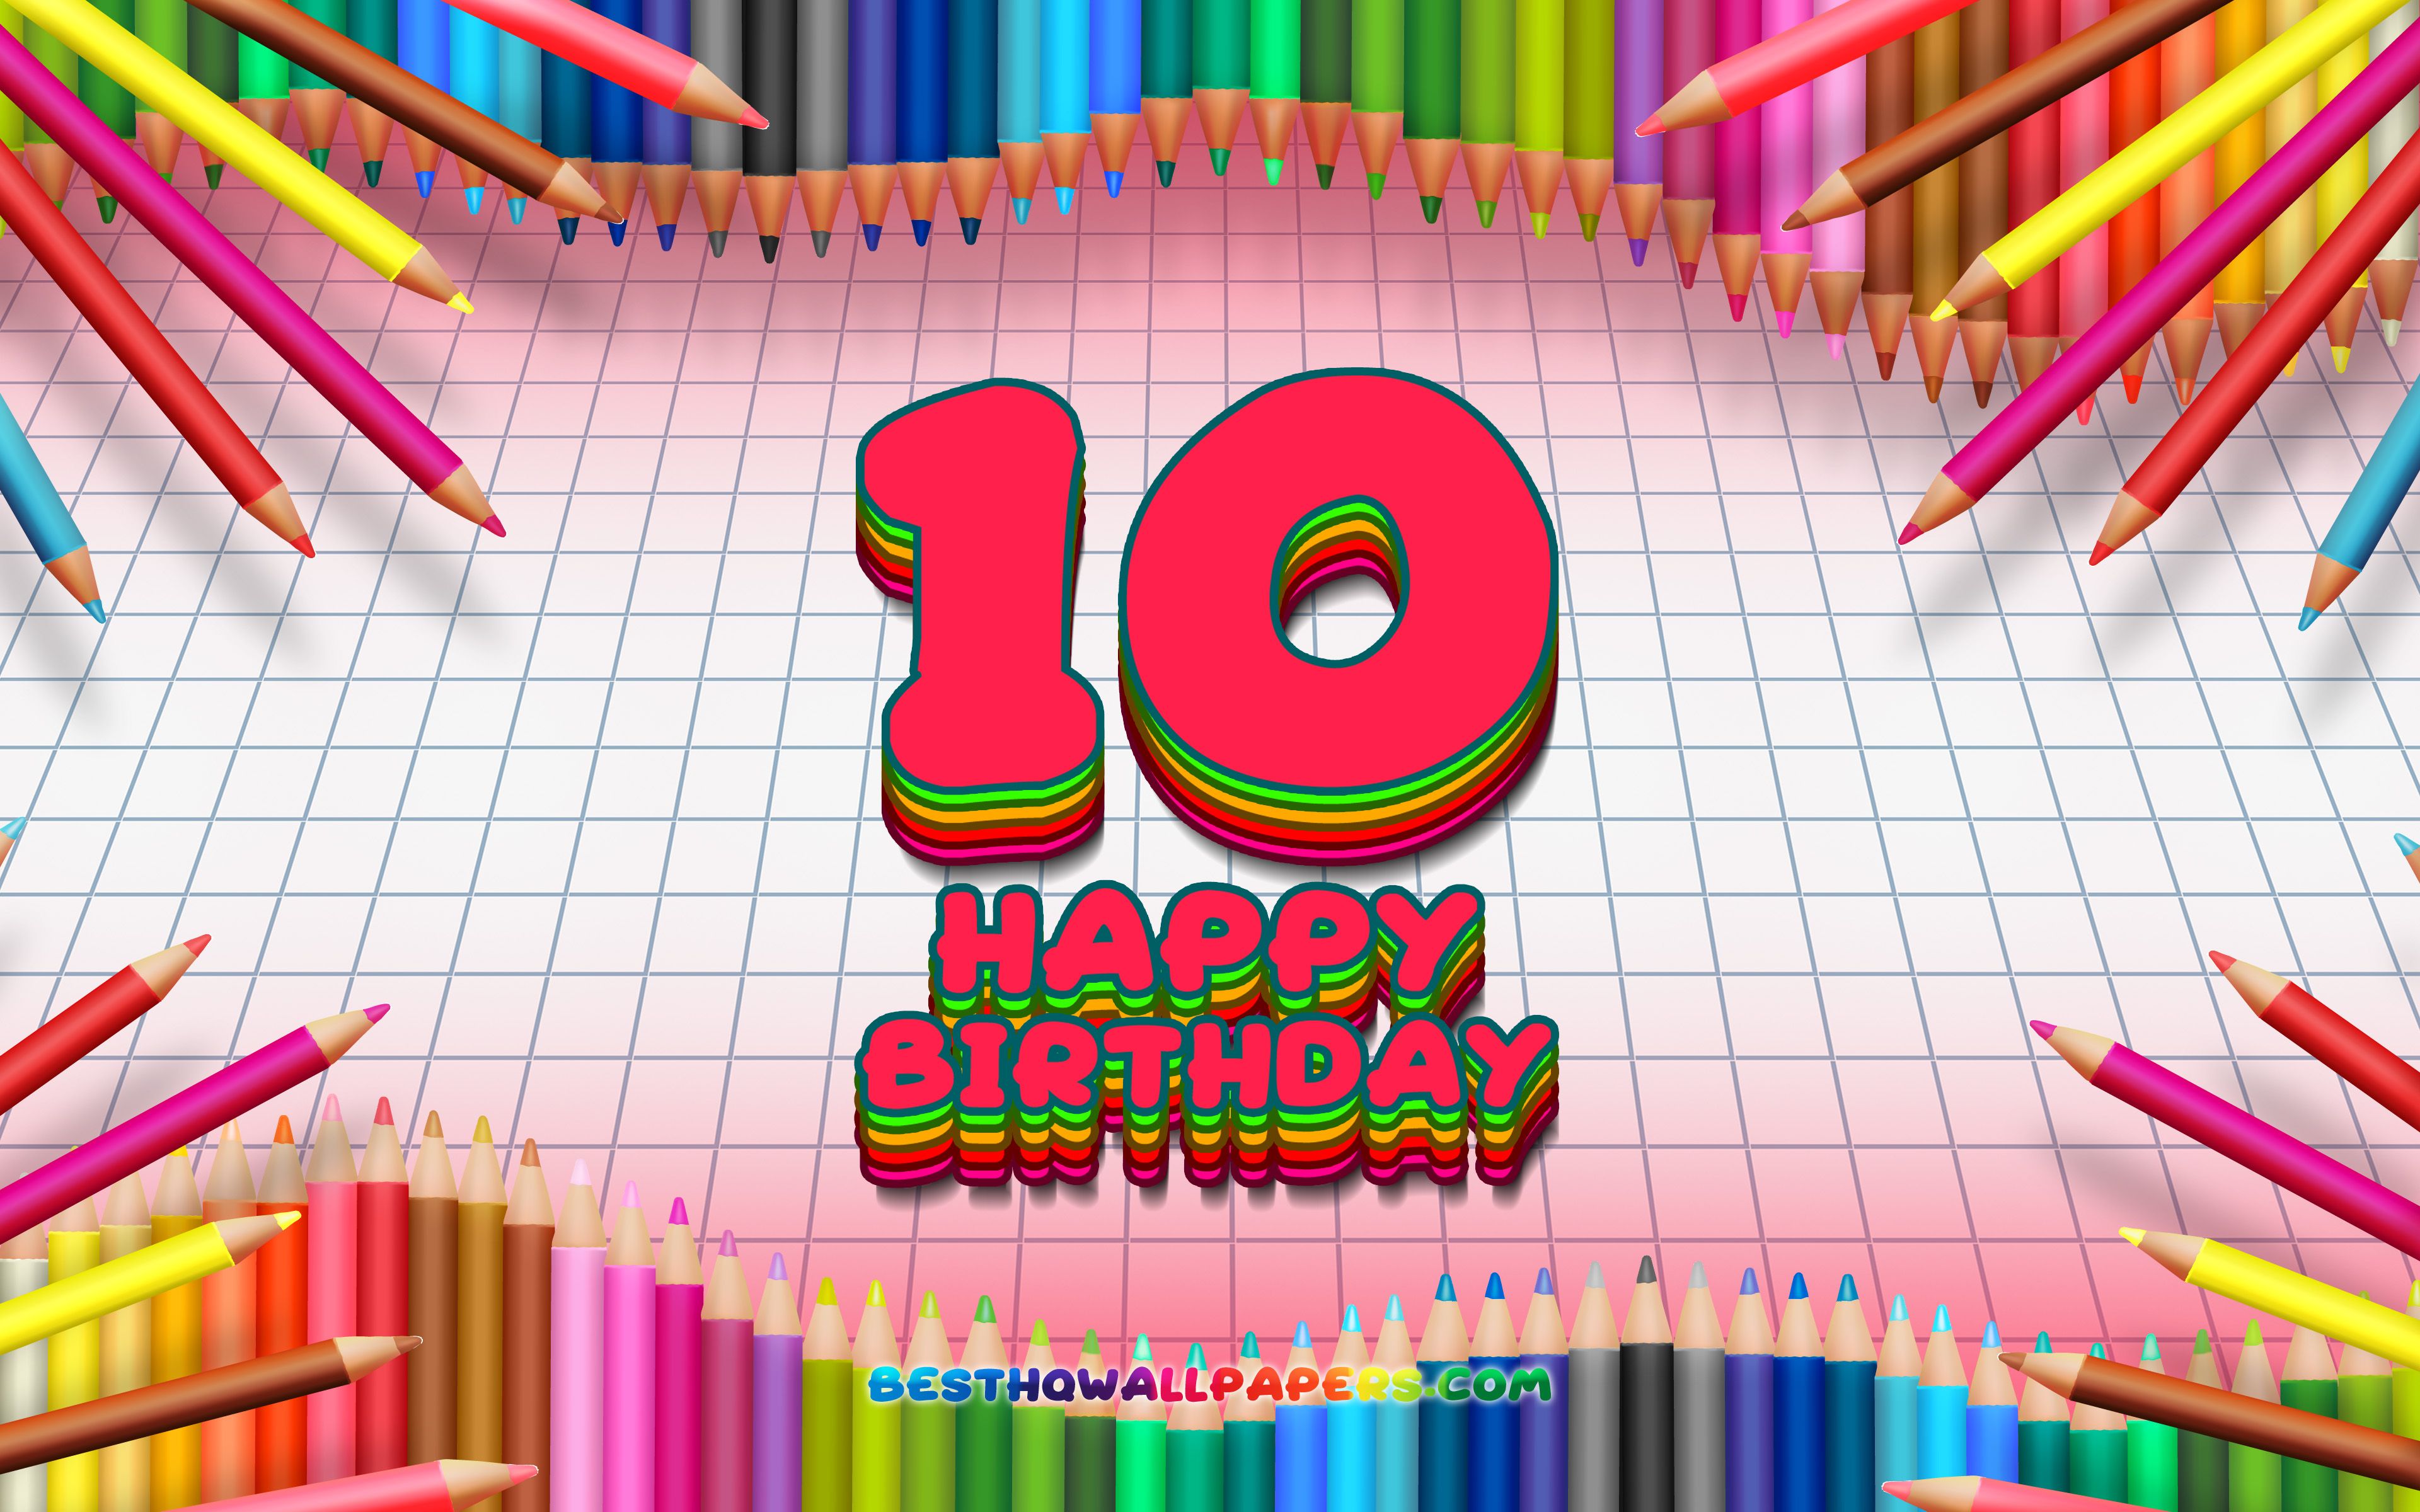 Download wallpaper 4k, Happy 10th birthday, colorful pencils